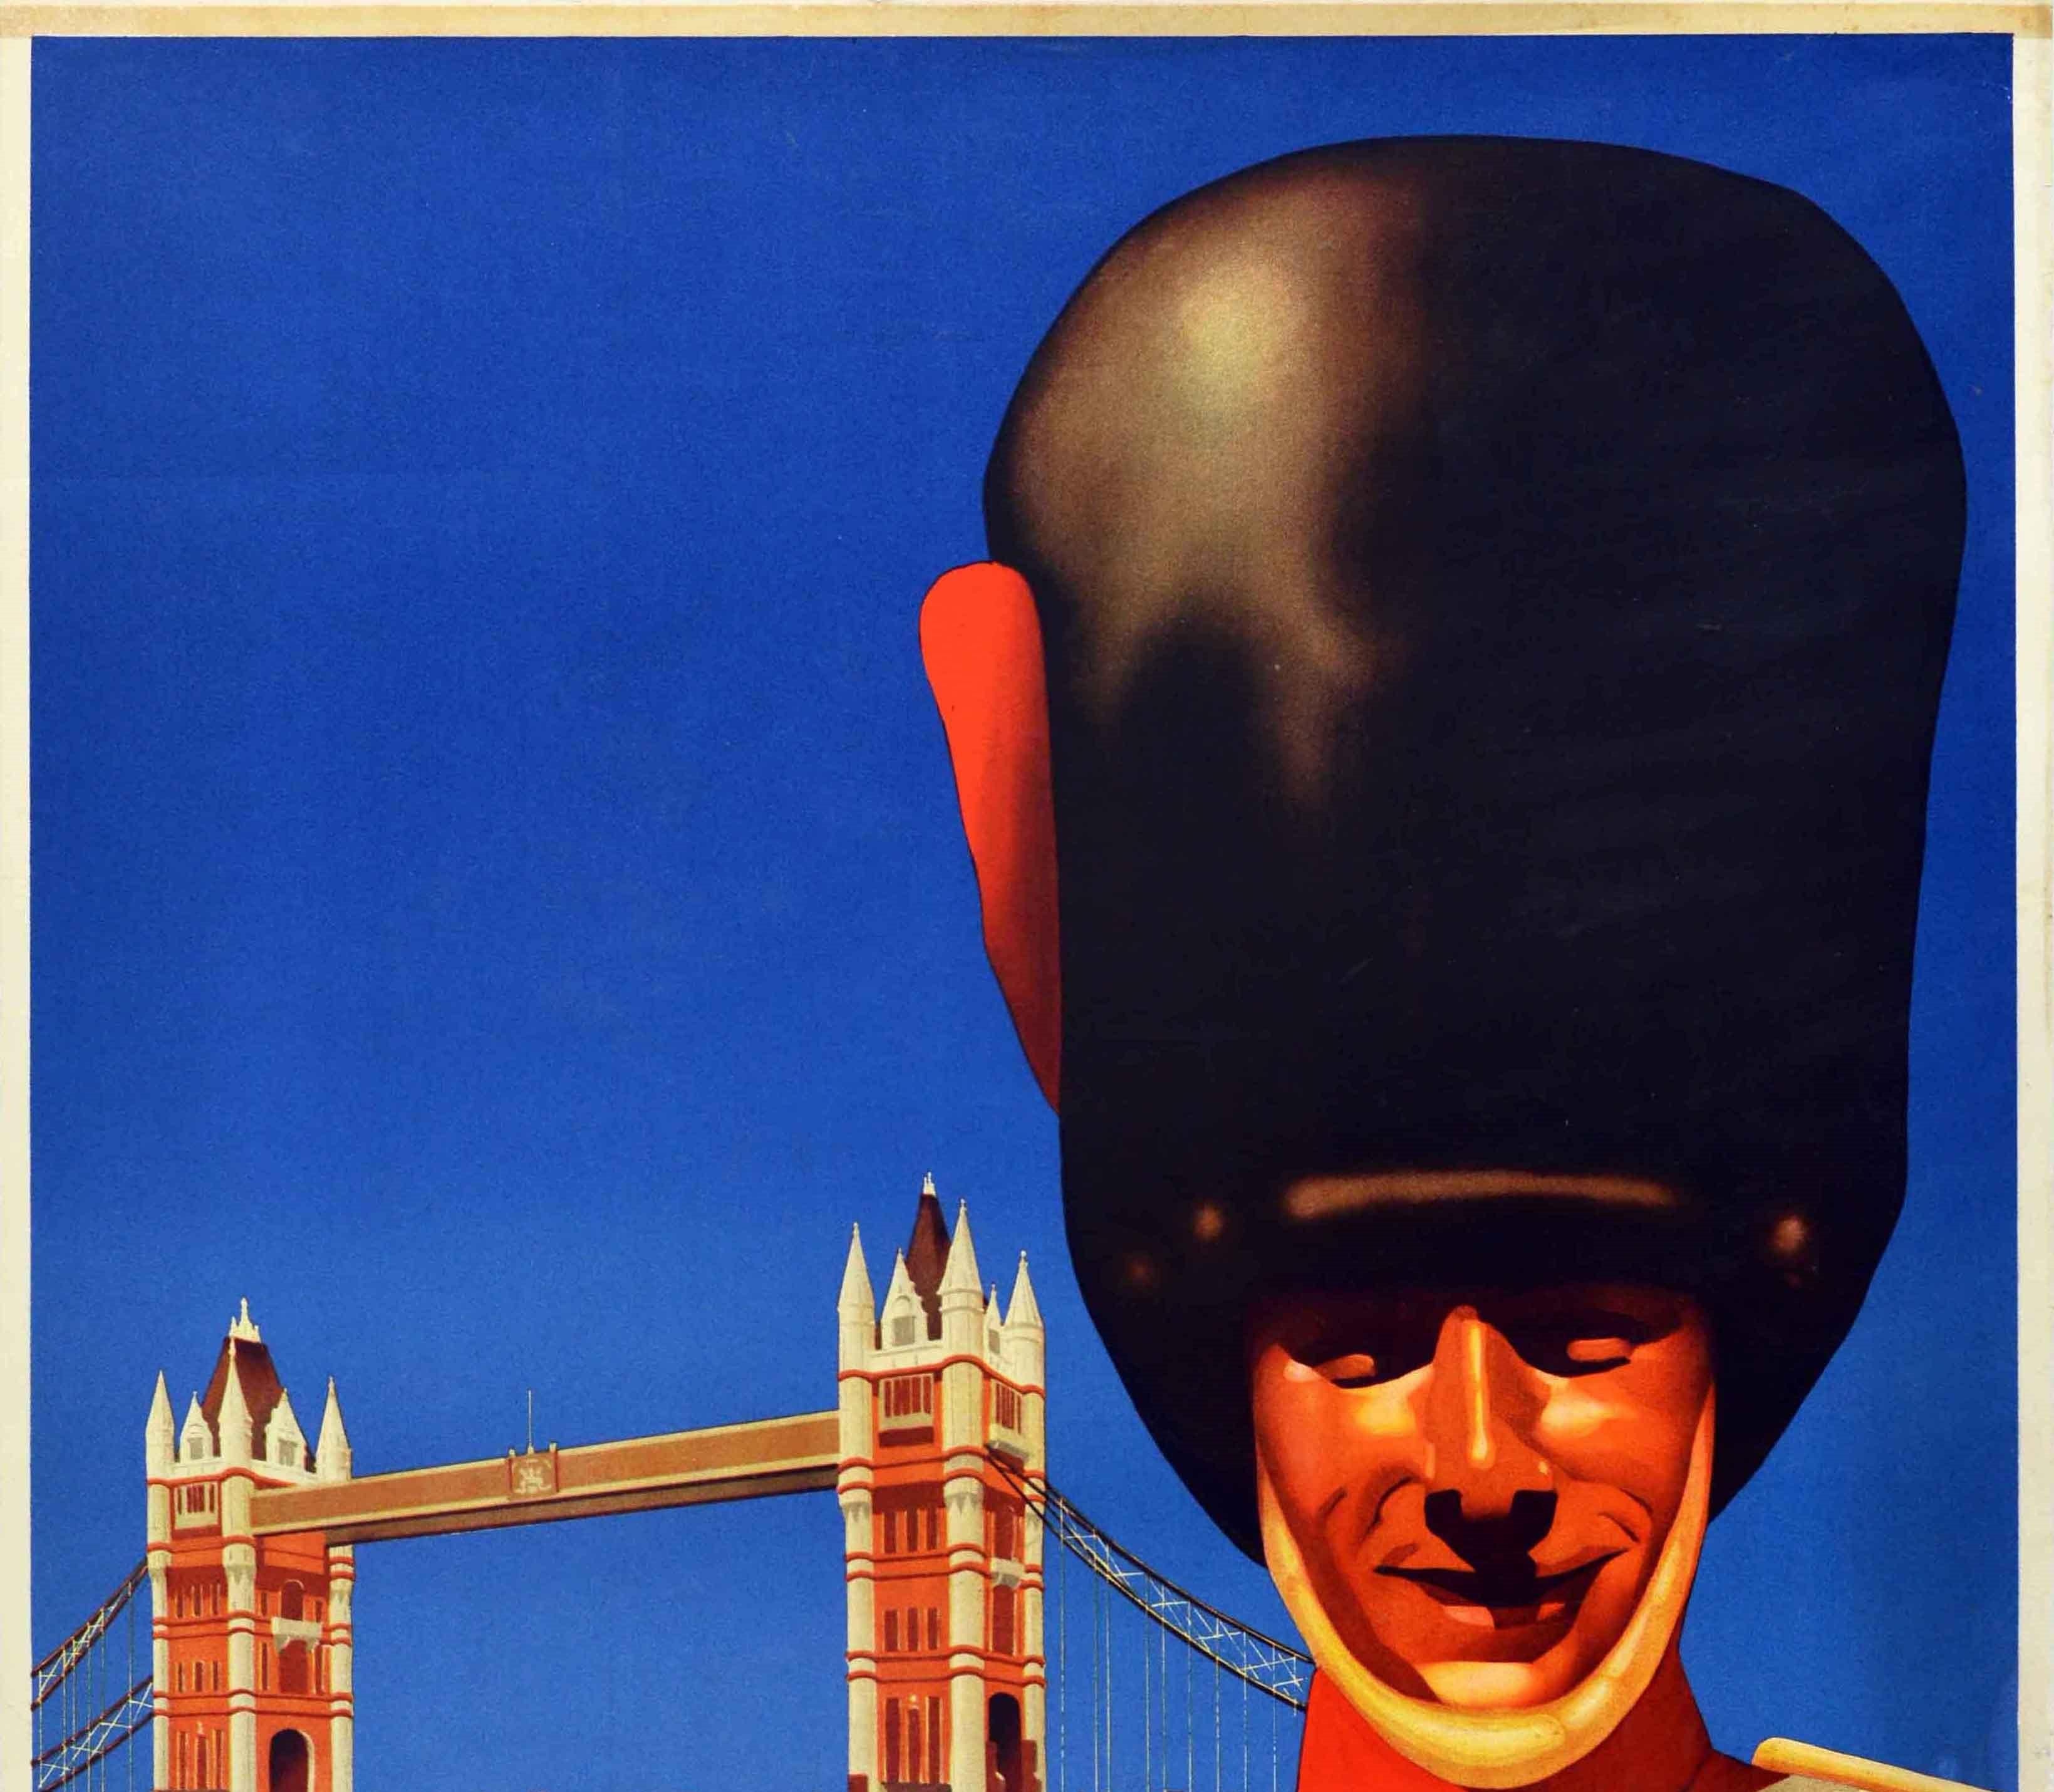 Original Vintage Travel Poster London Cruise Ft. Royal Guard Tower Bridge Design - Print by Ottomar Anton